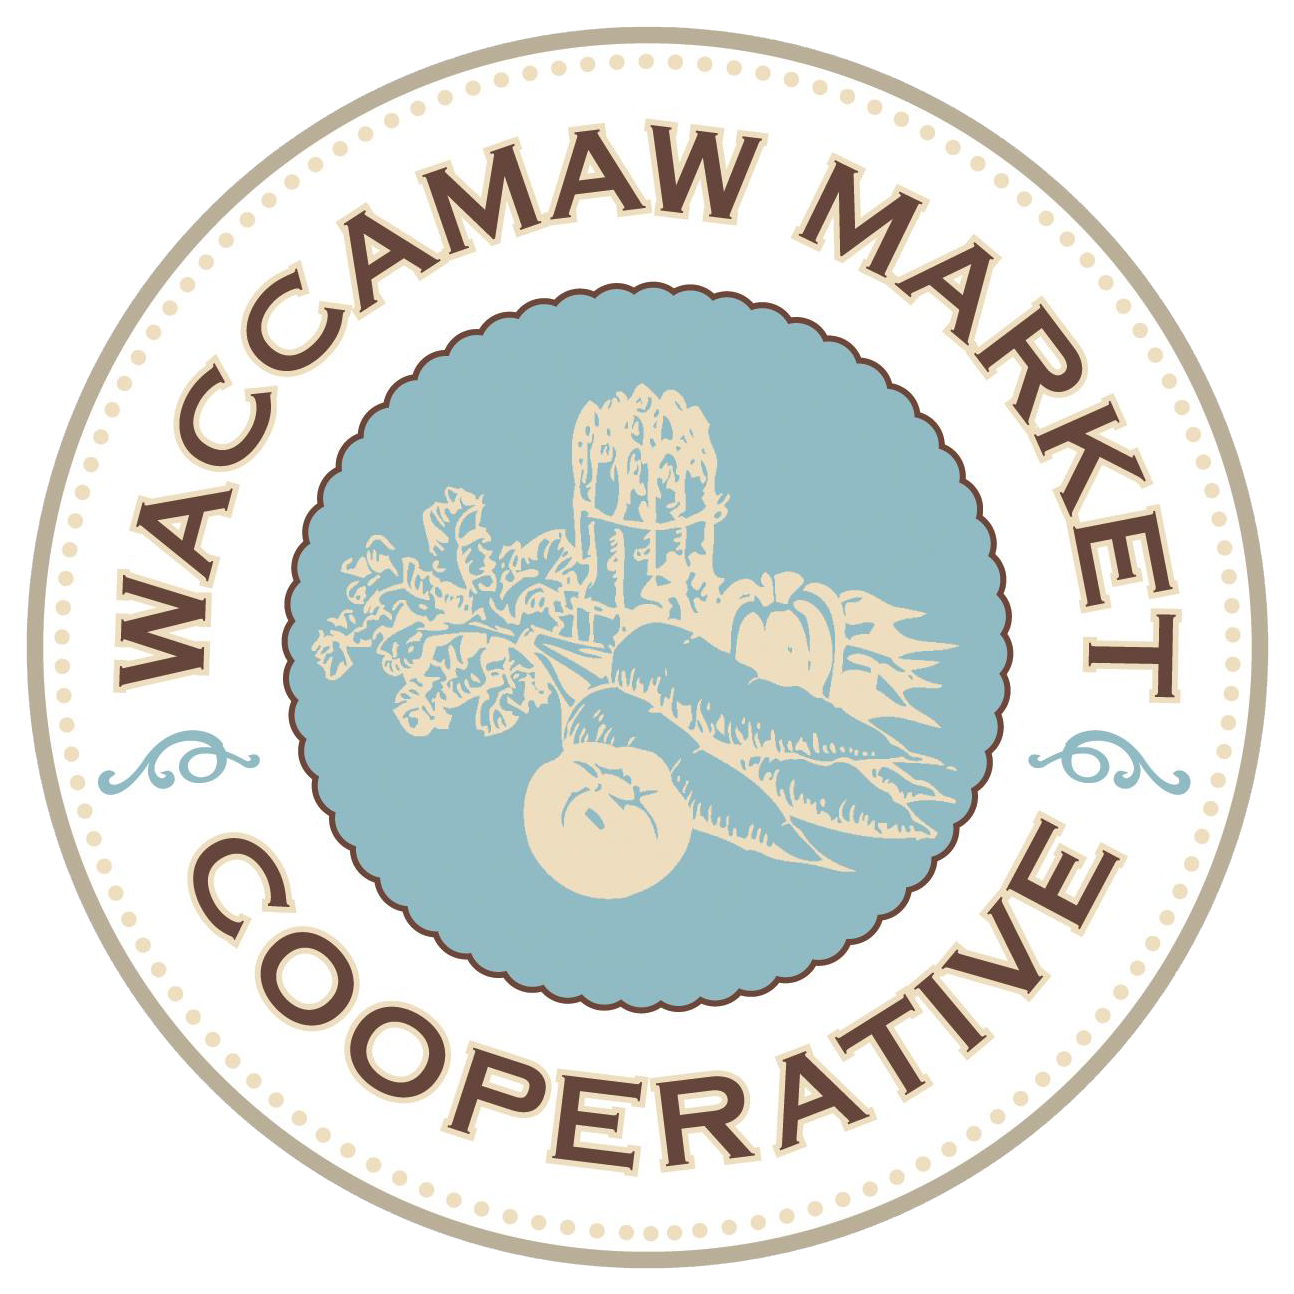 Waccamaw Market Cooperative